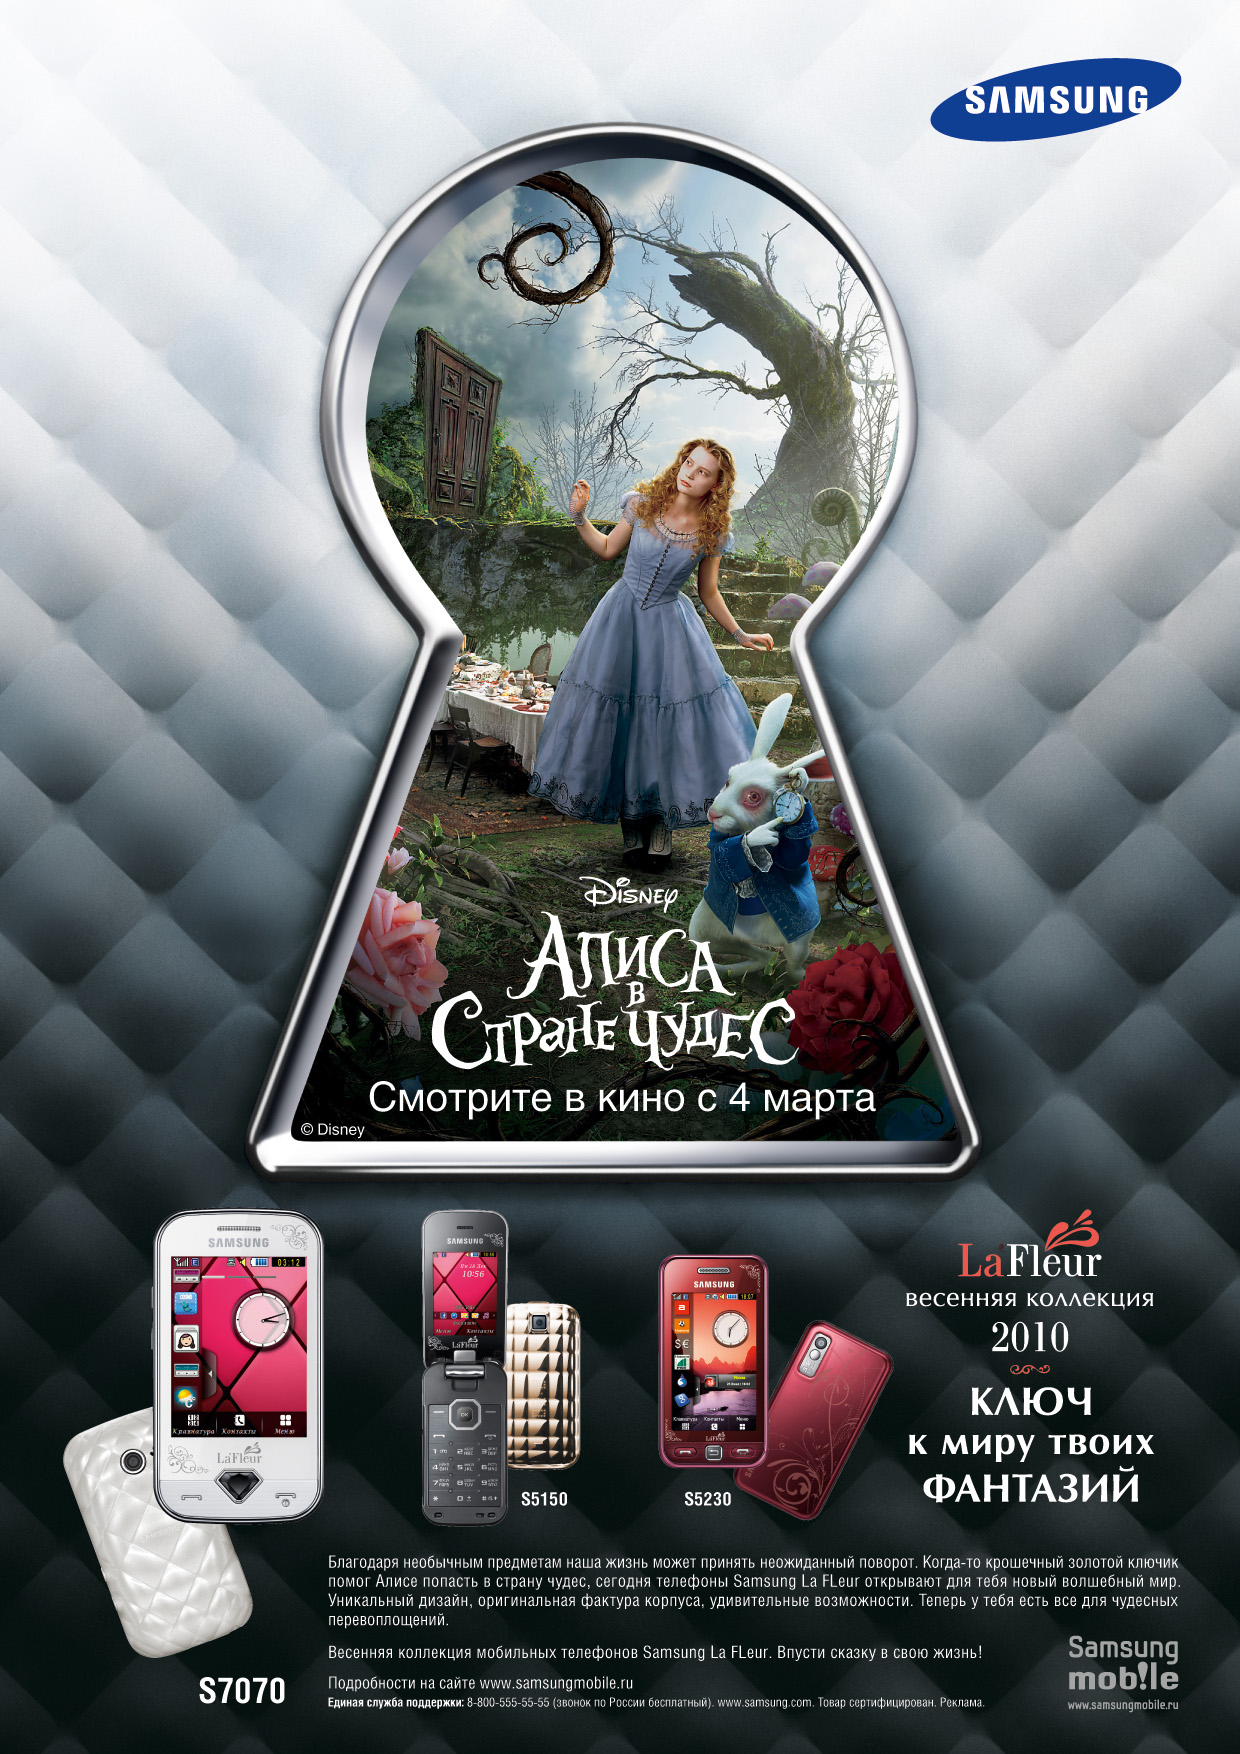 Номер телефона можно алиса. Реклама в стиле Алиса в стране чудес. Использование сказок в рекламе. Реклама сказки. Реклама Алиса в стране.